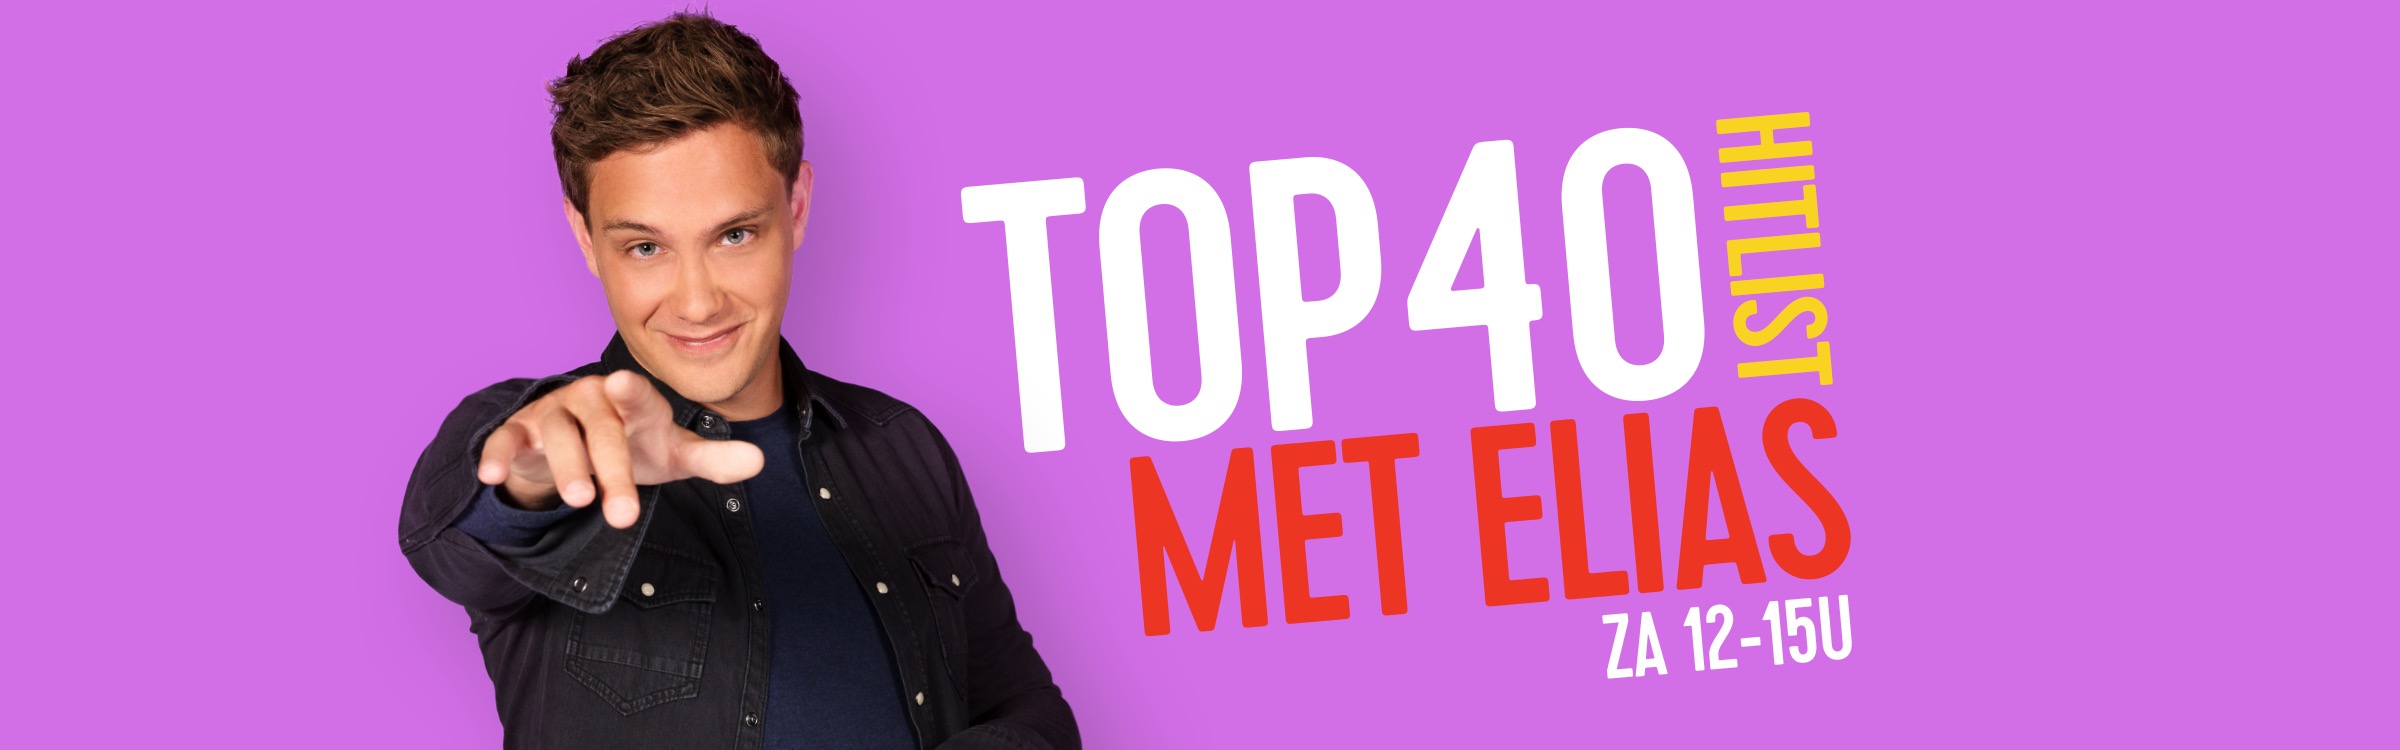 Top 40 hitlist met elias